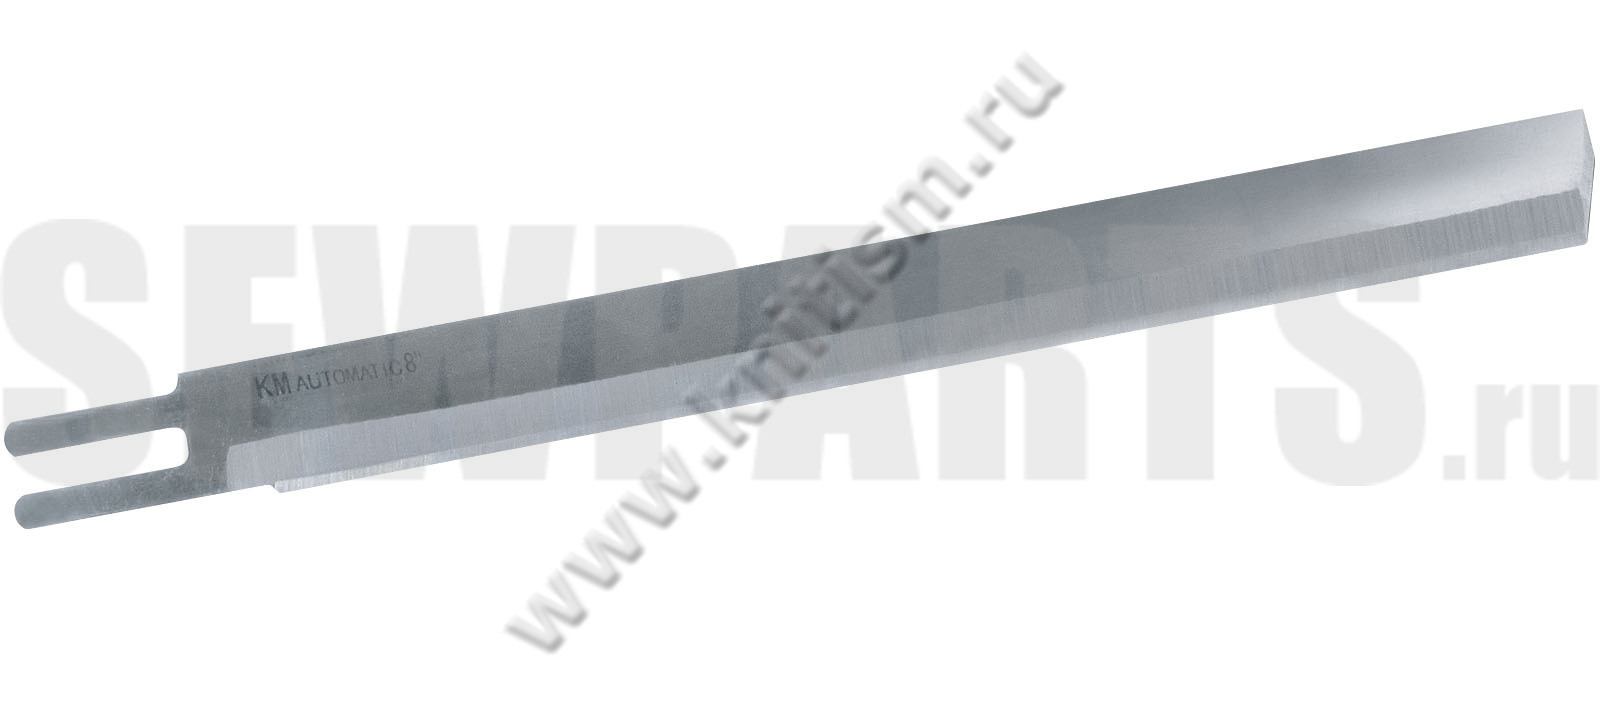 Нож прямой повыш прочности (Арт. 1NSK-110 " 6")